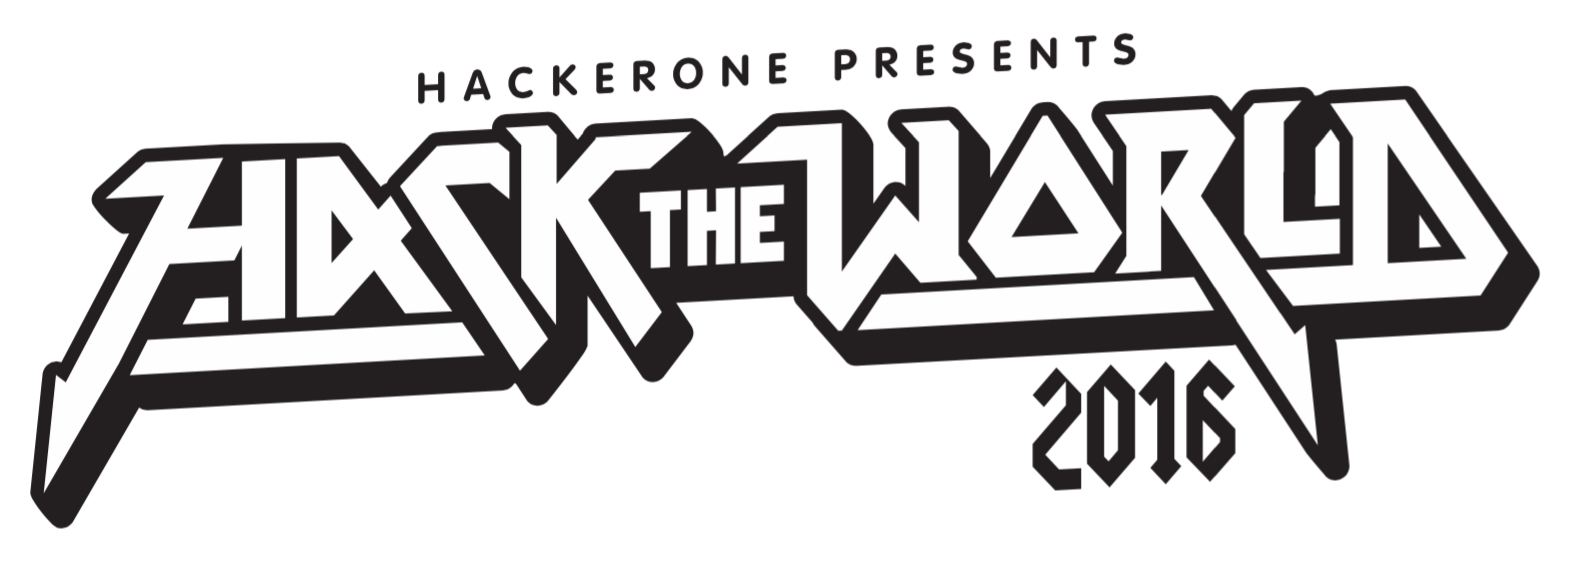 hacktheworld logo